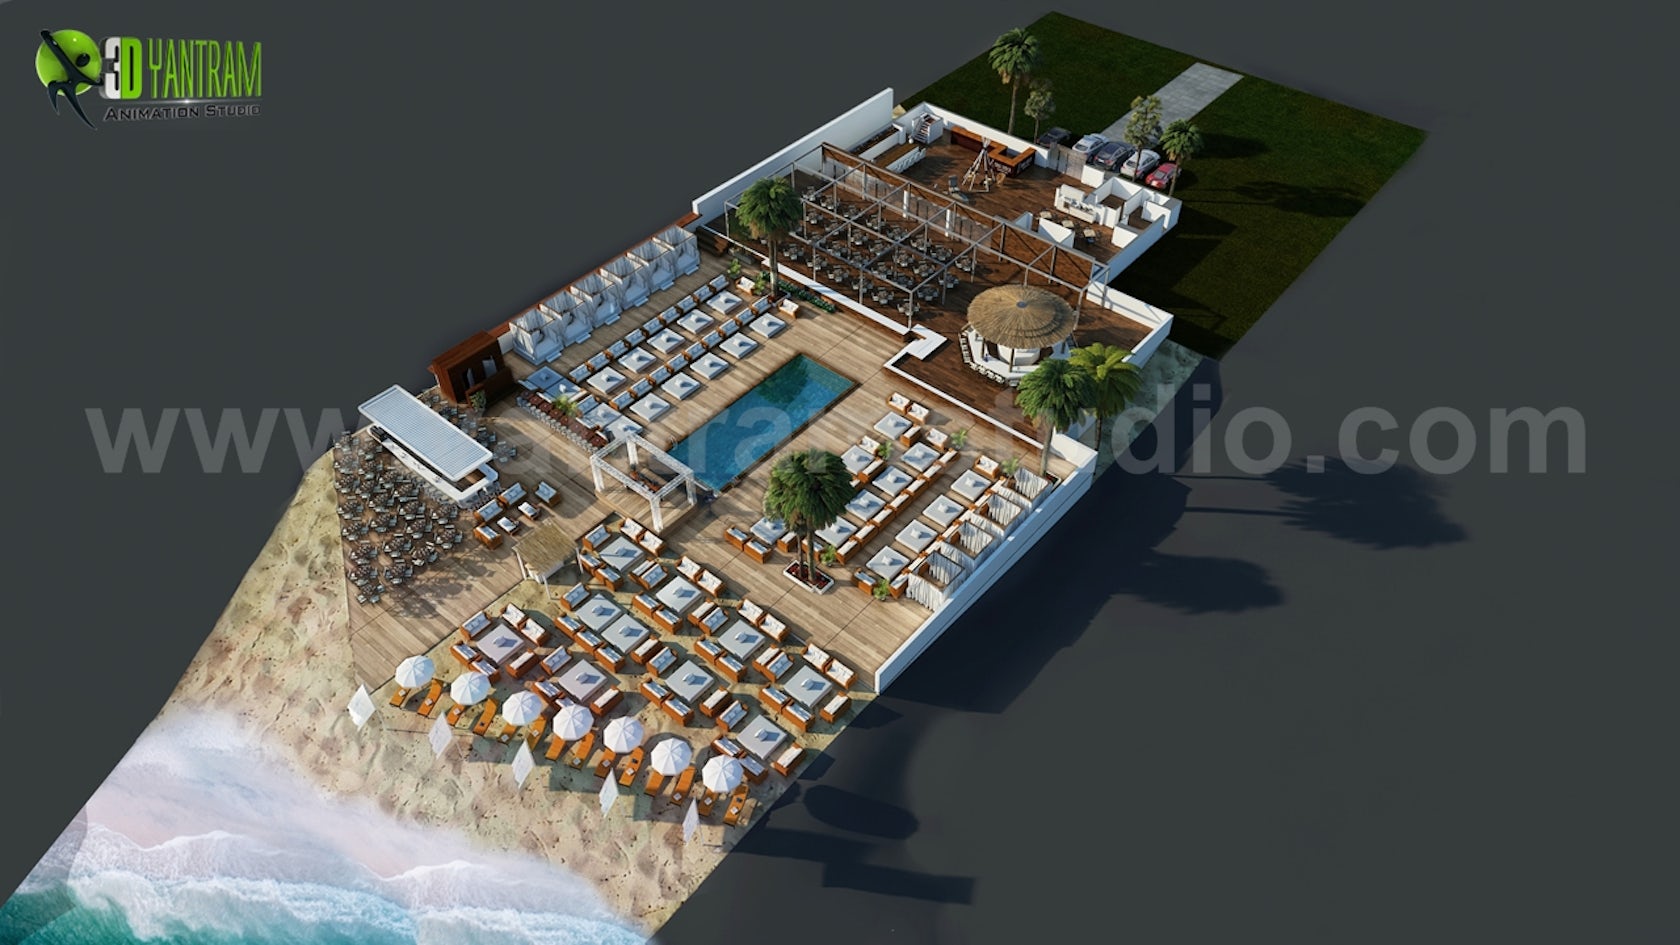 Beach Restaurant Floor Plan Examples Ideas By Yantram Floor Plan